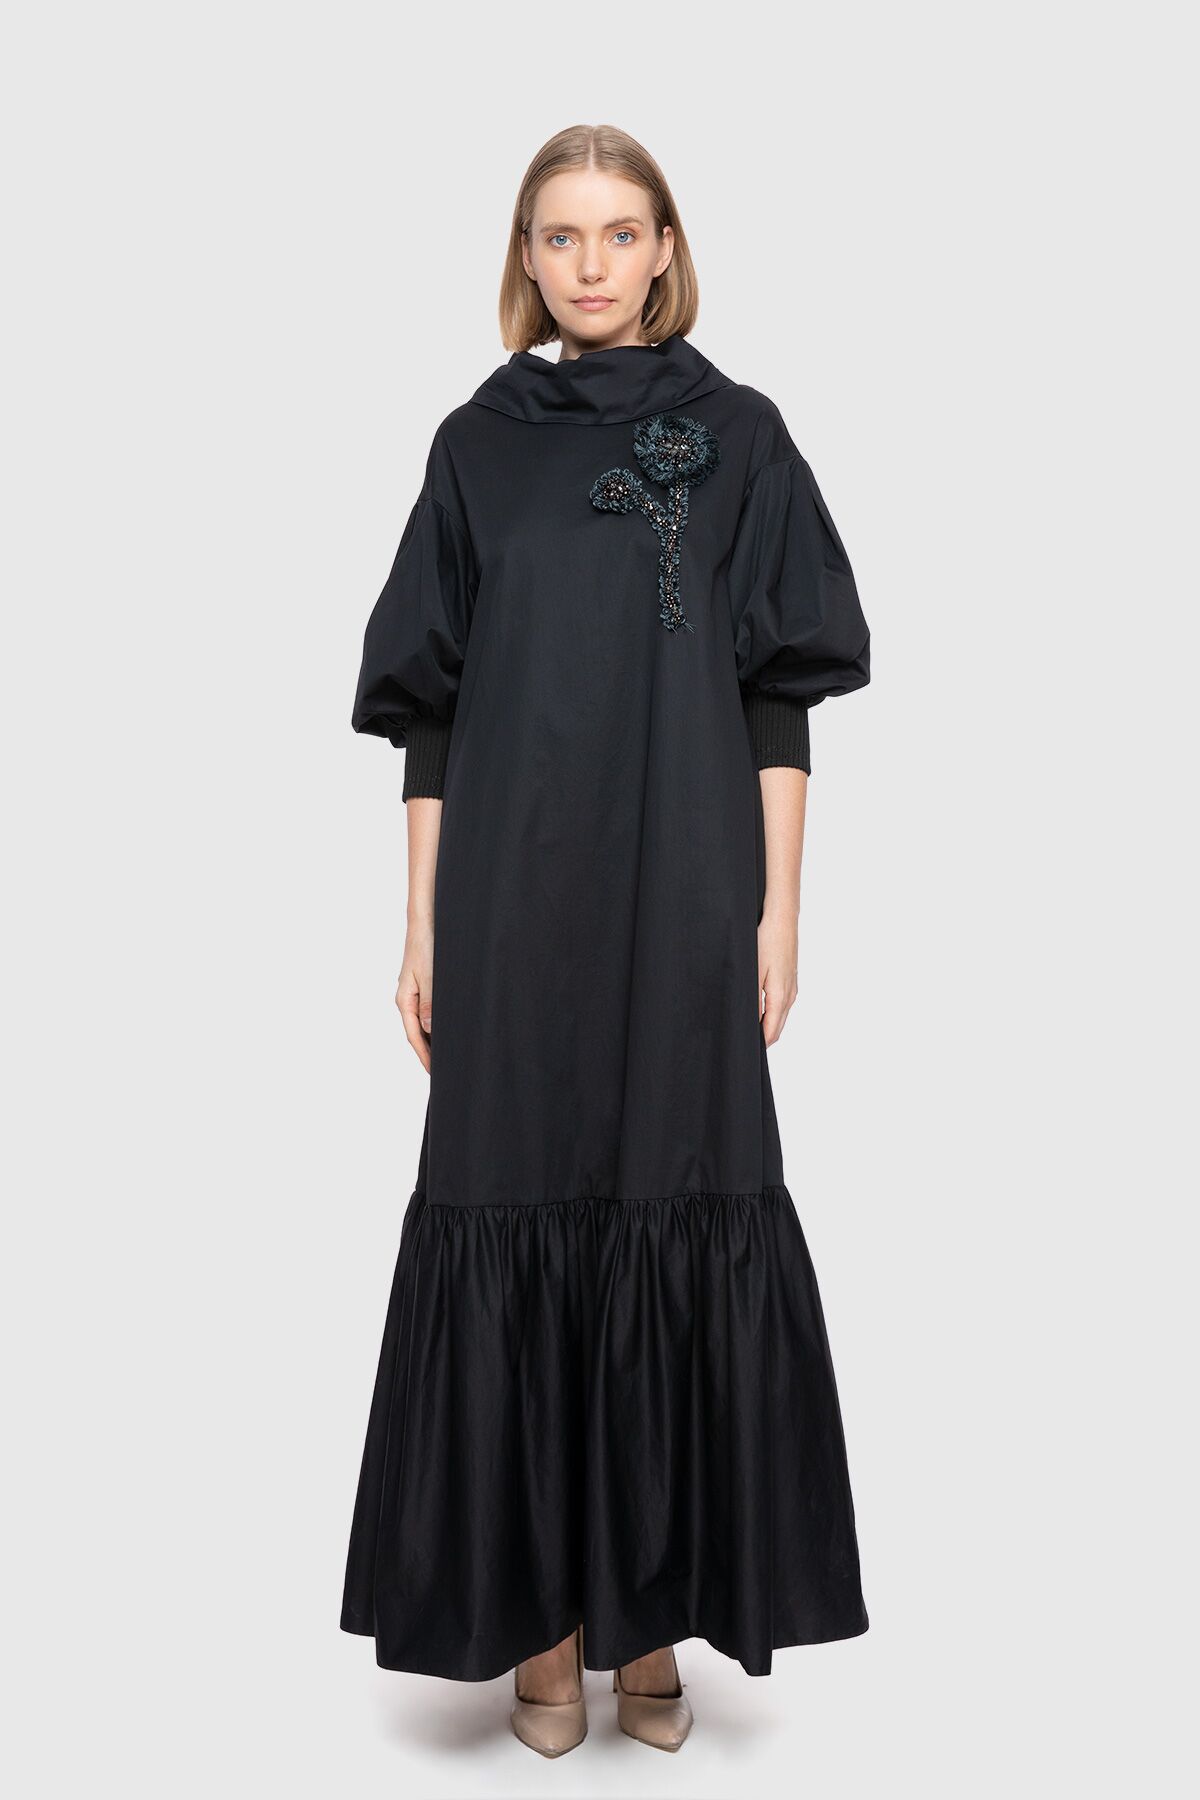  GIZIA - Applique Embroidered Long Black Poplin Dress